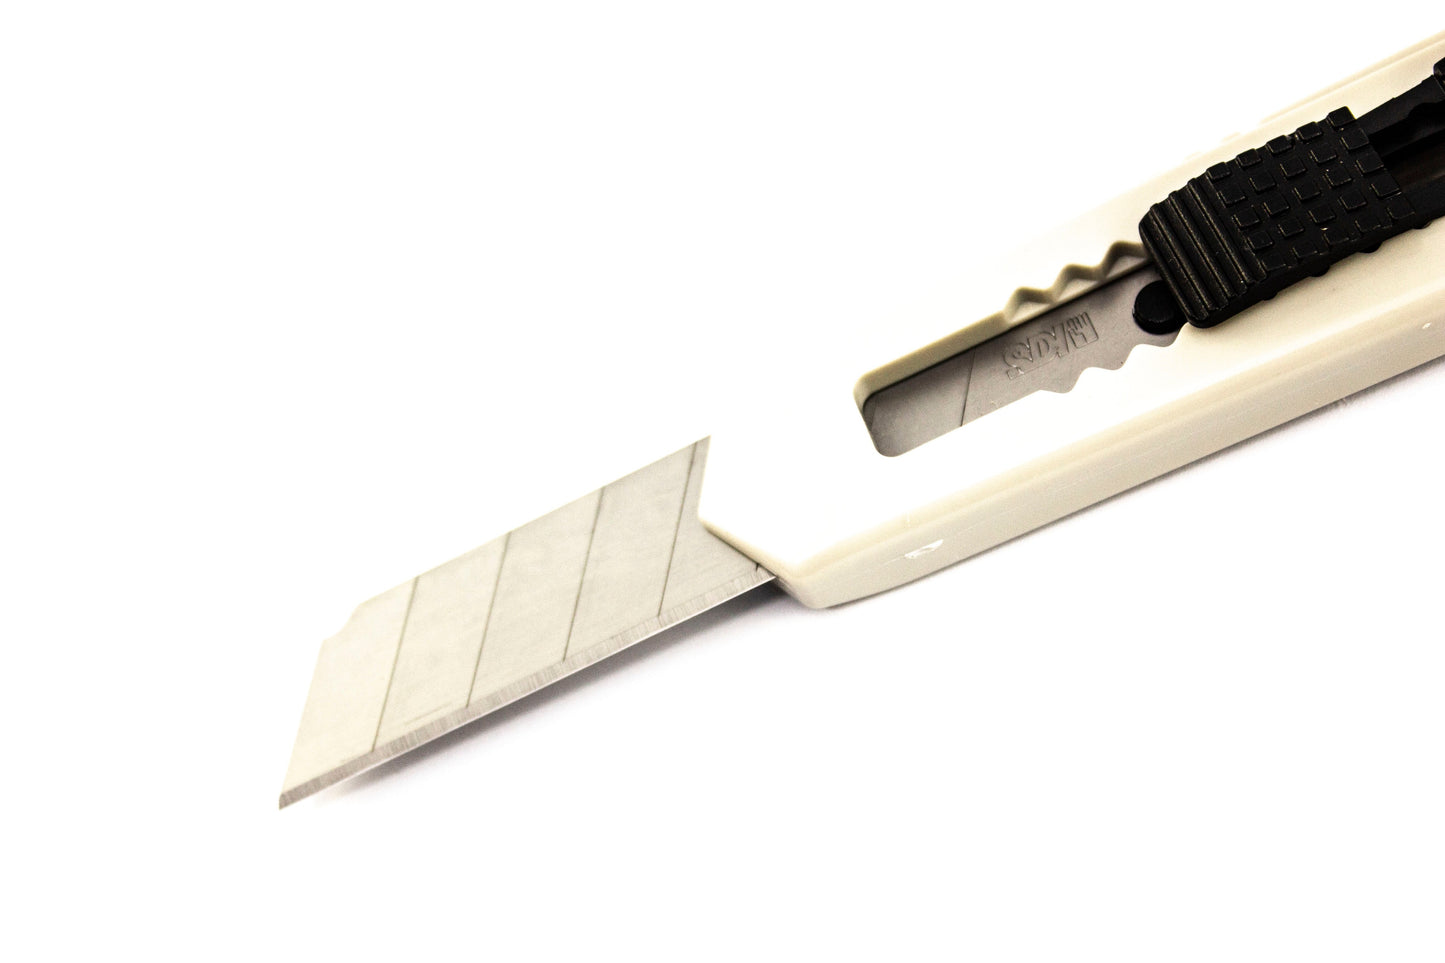 SDI Cutter Knife no. 0426